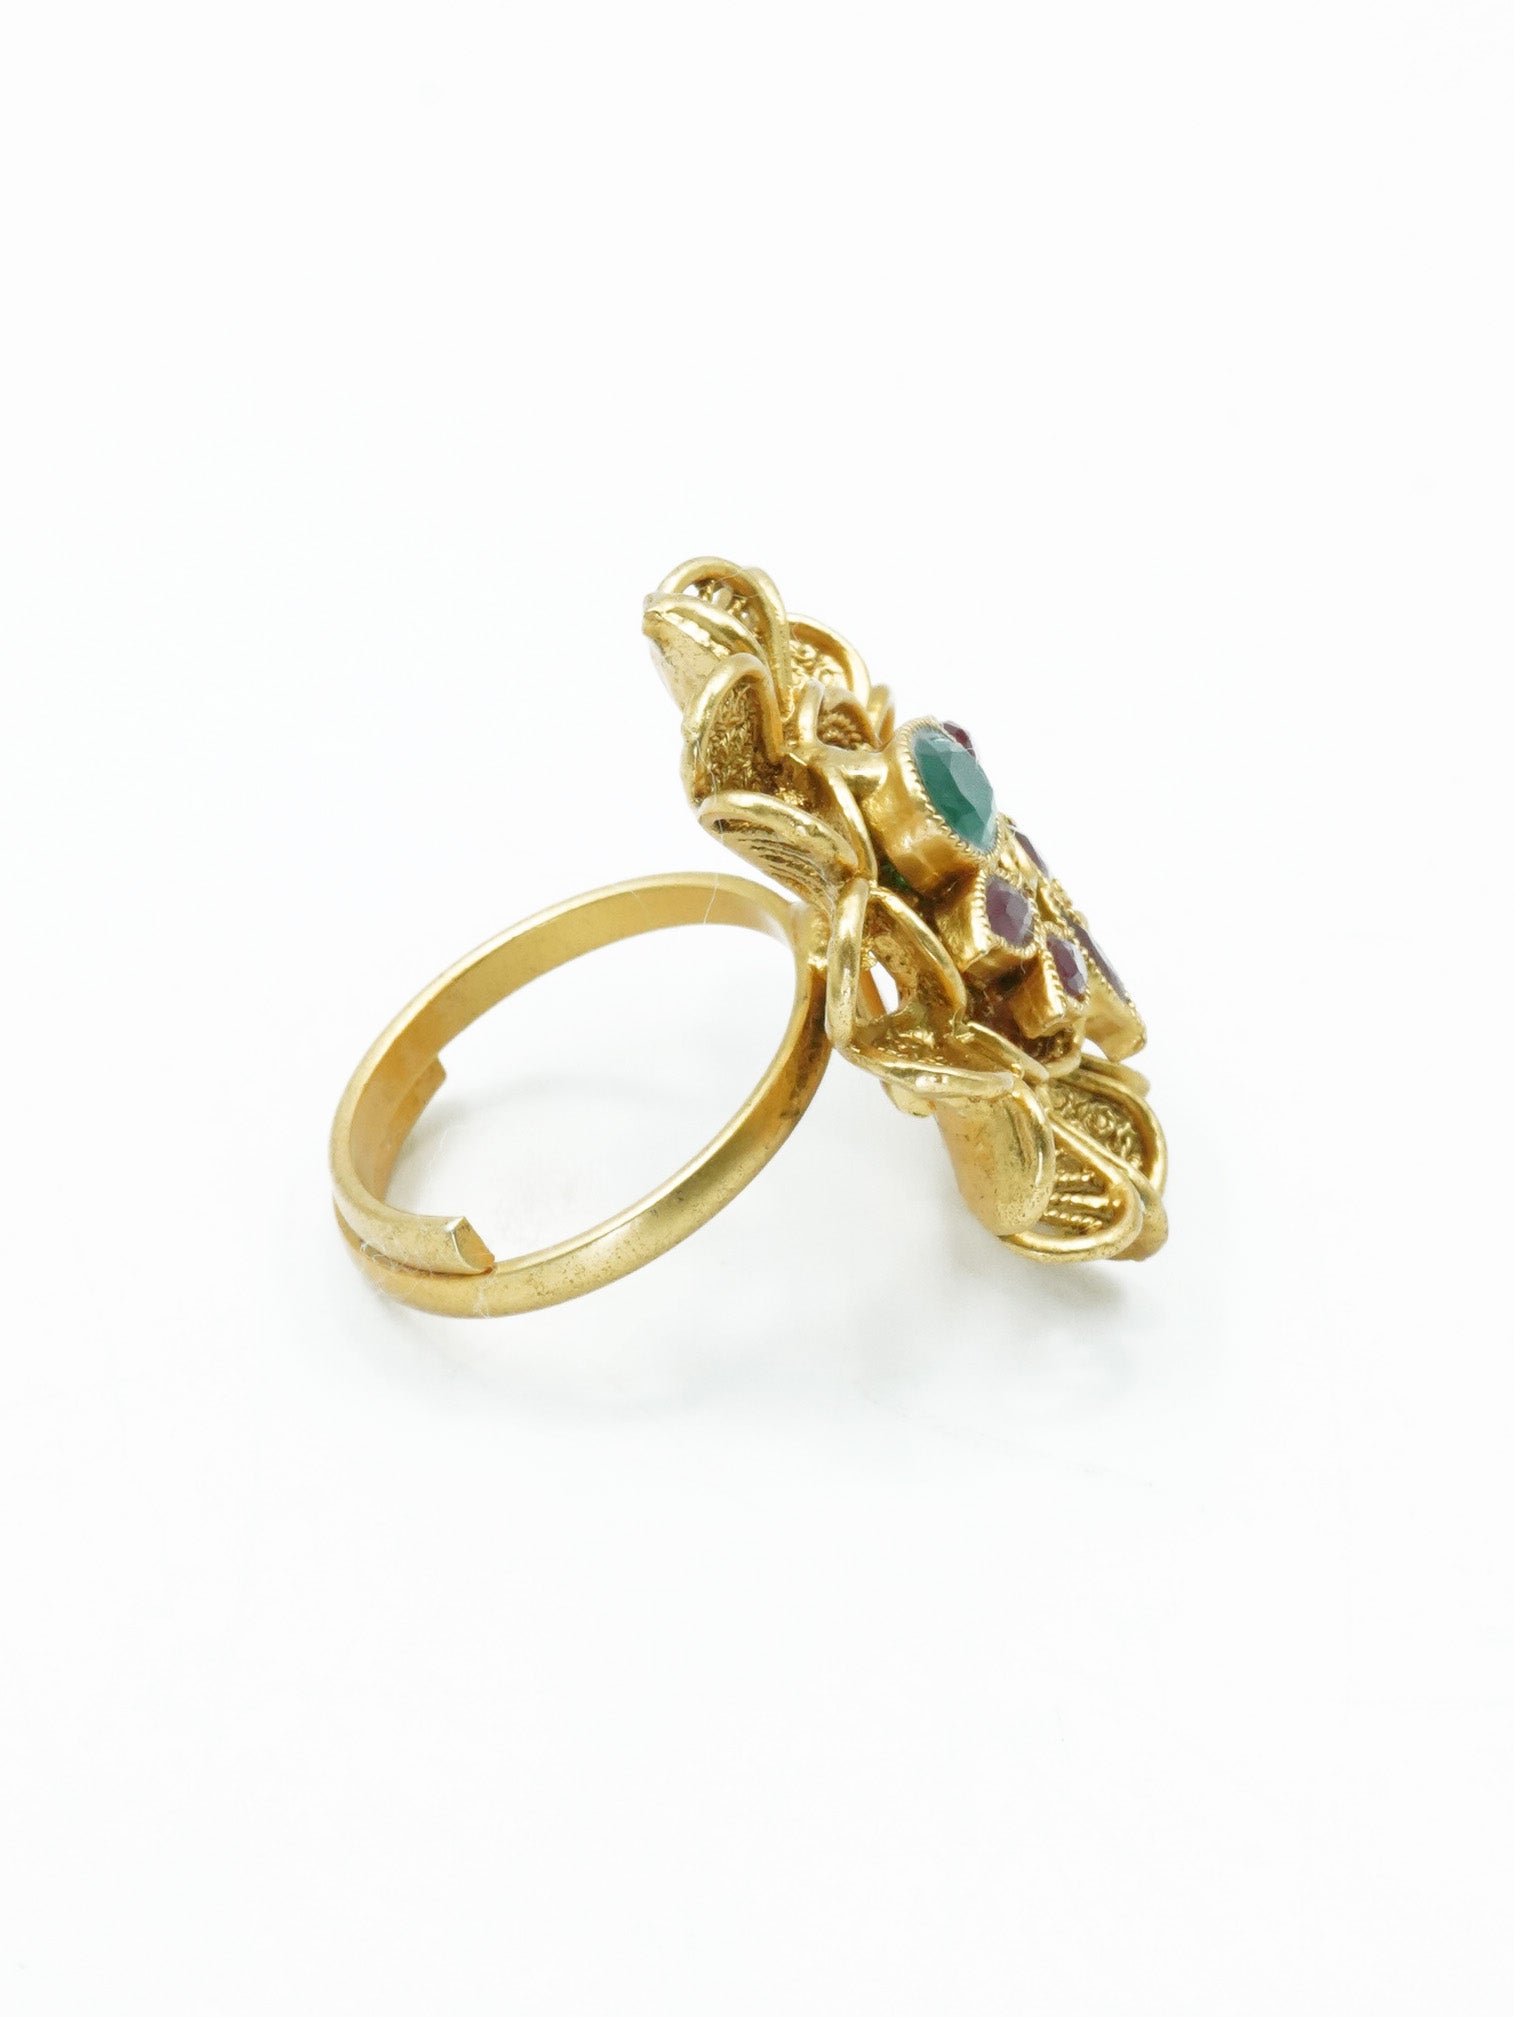 Antique Gold Plated Adjustable Size Designer Finger ring with Stones 11063N